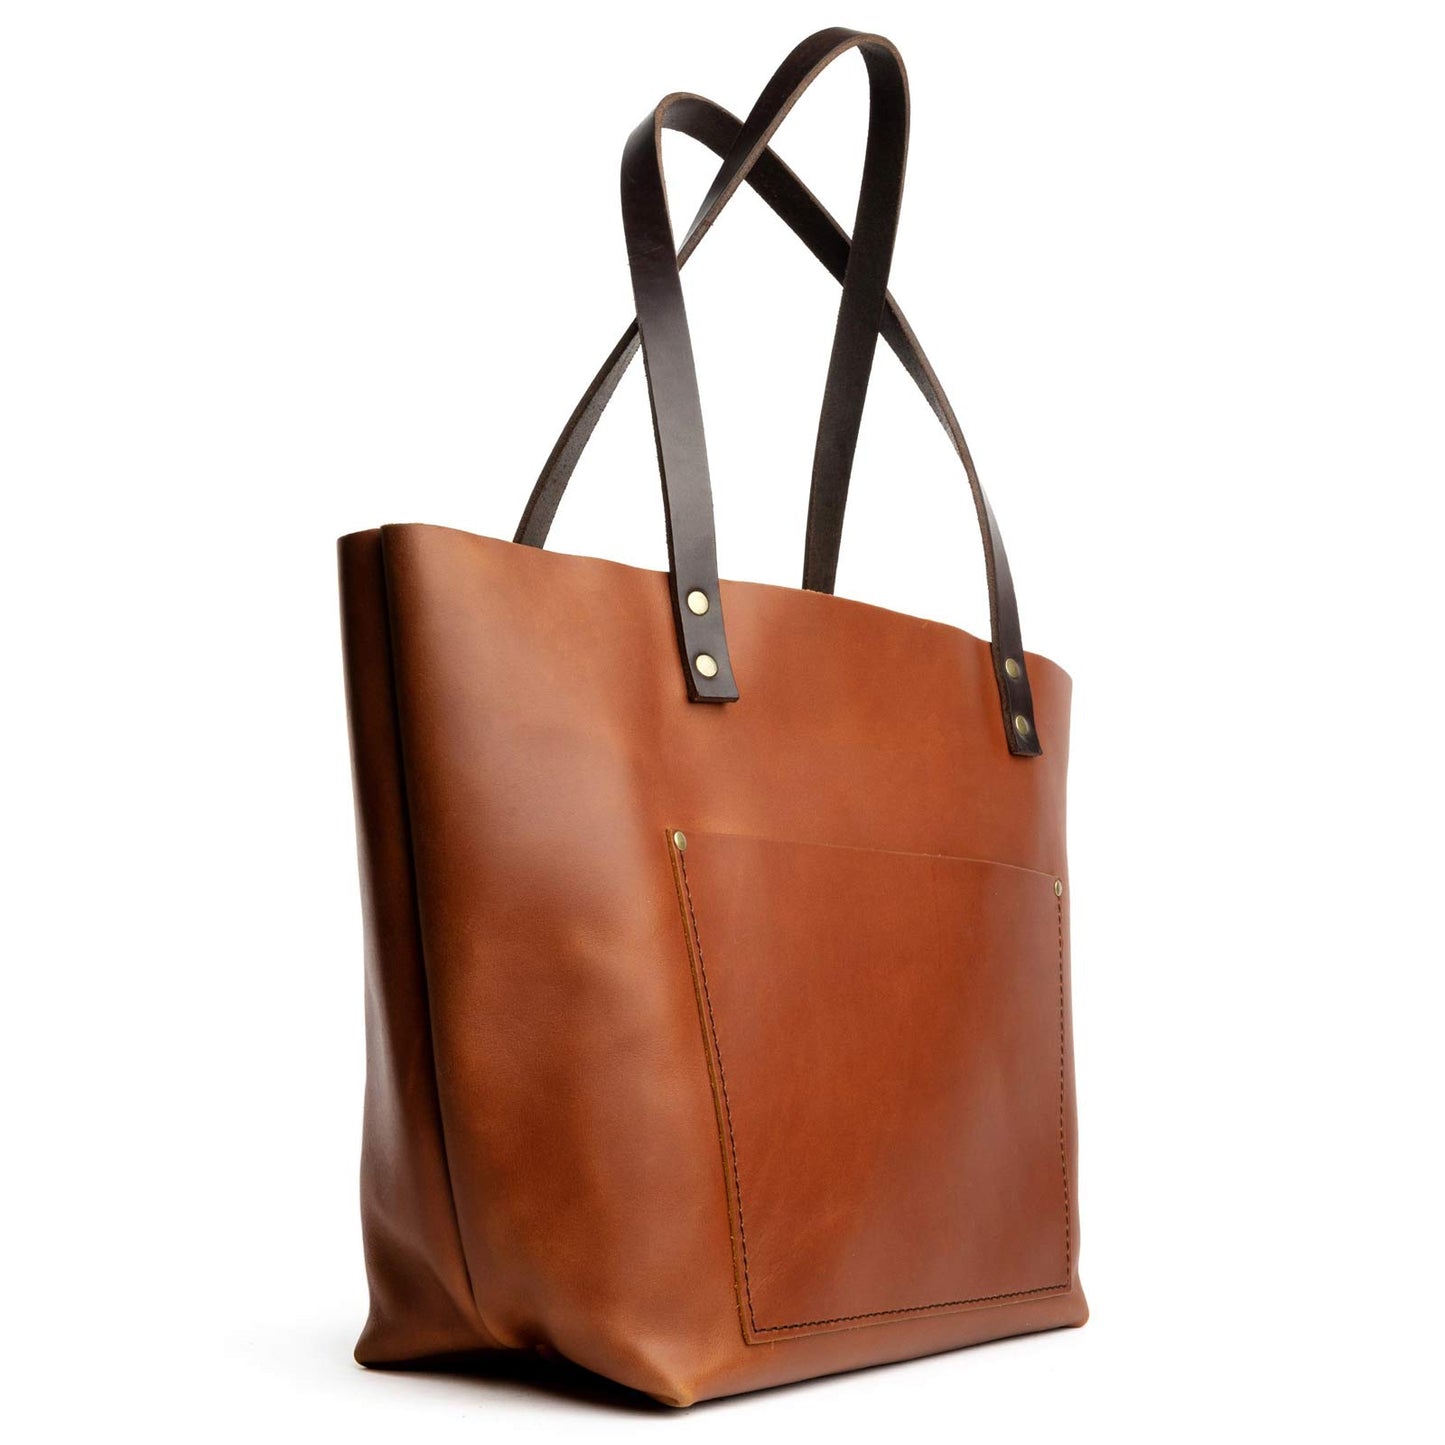 Portland leather company : r/handbags